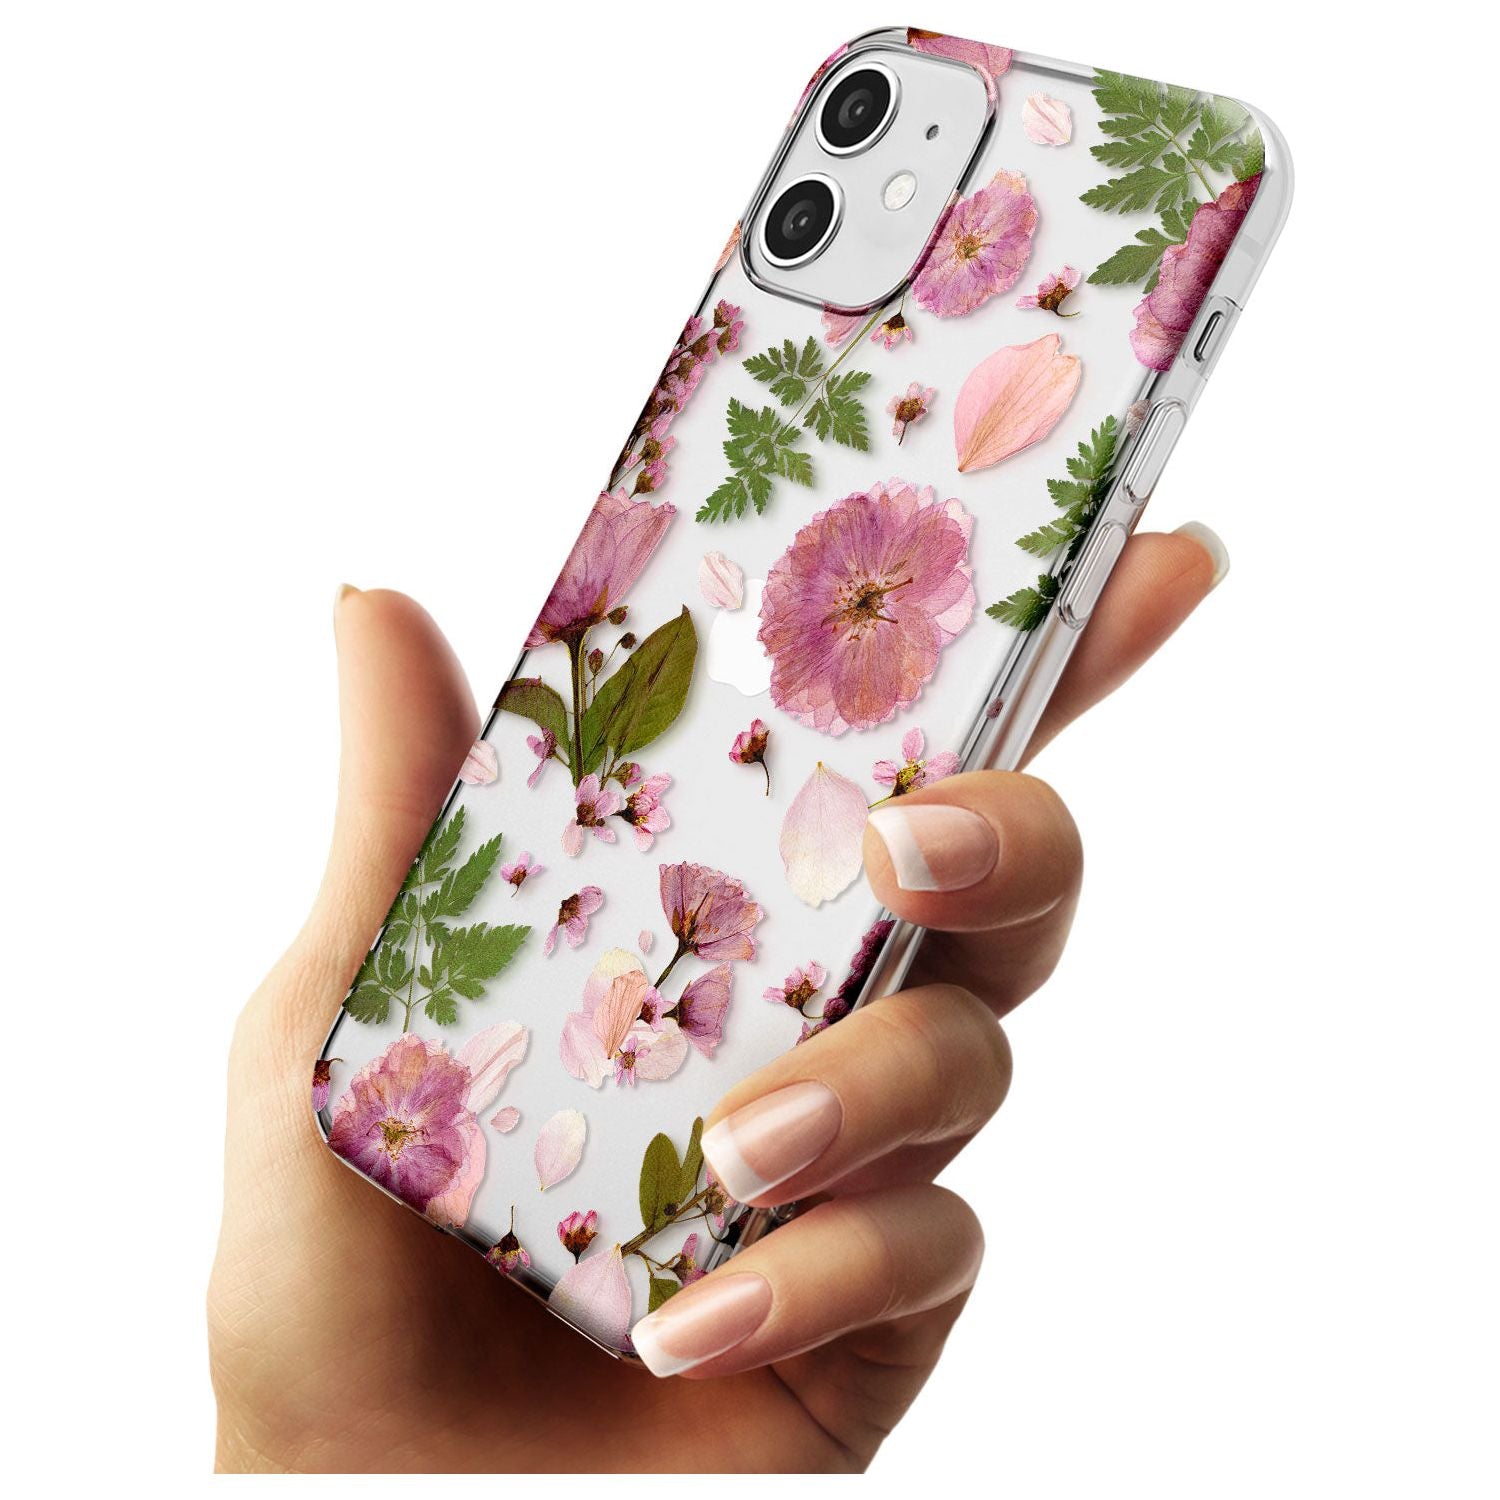 Natural Arrangement of Flowers & Leaves Design Slim TPU Phone Case for iPhone 11